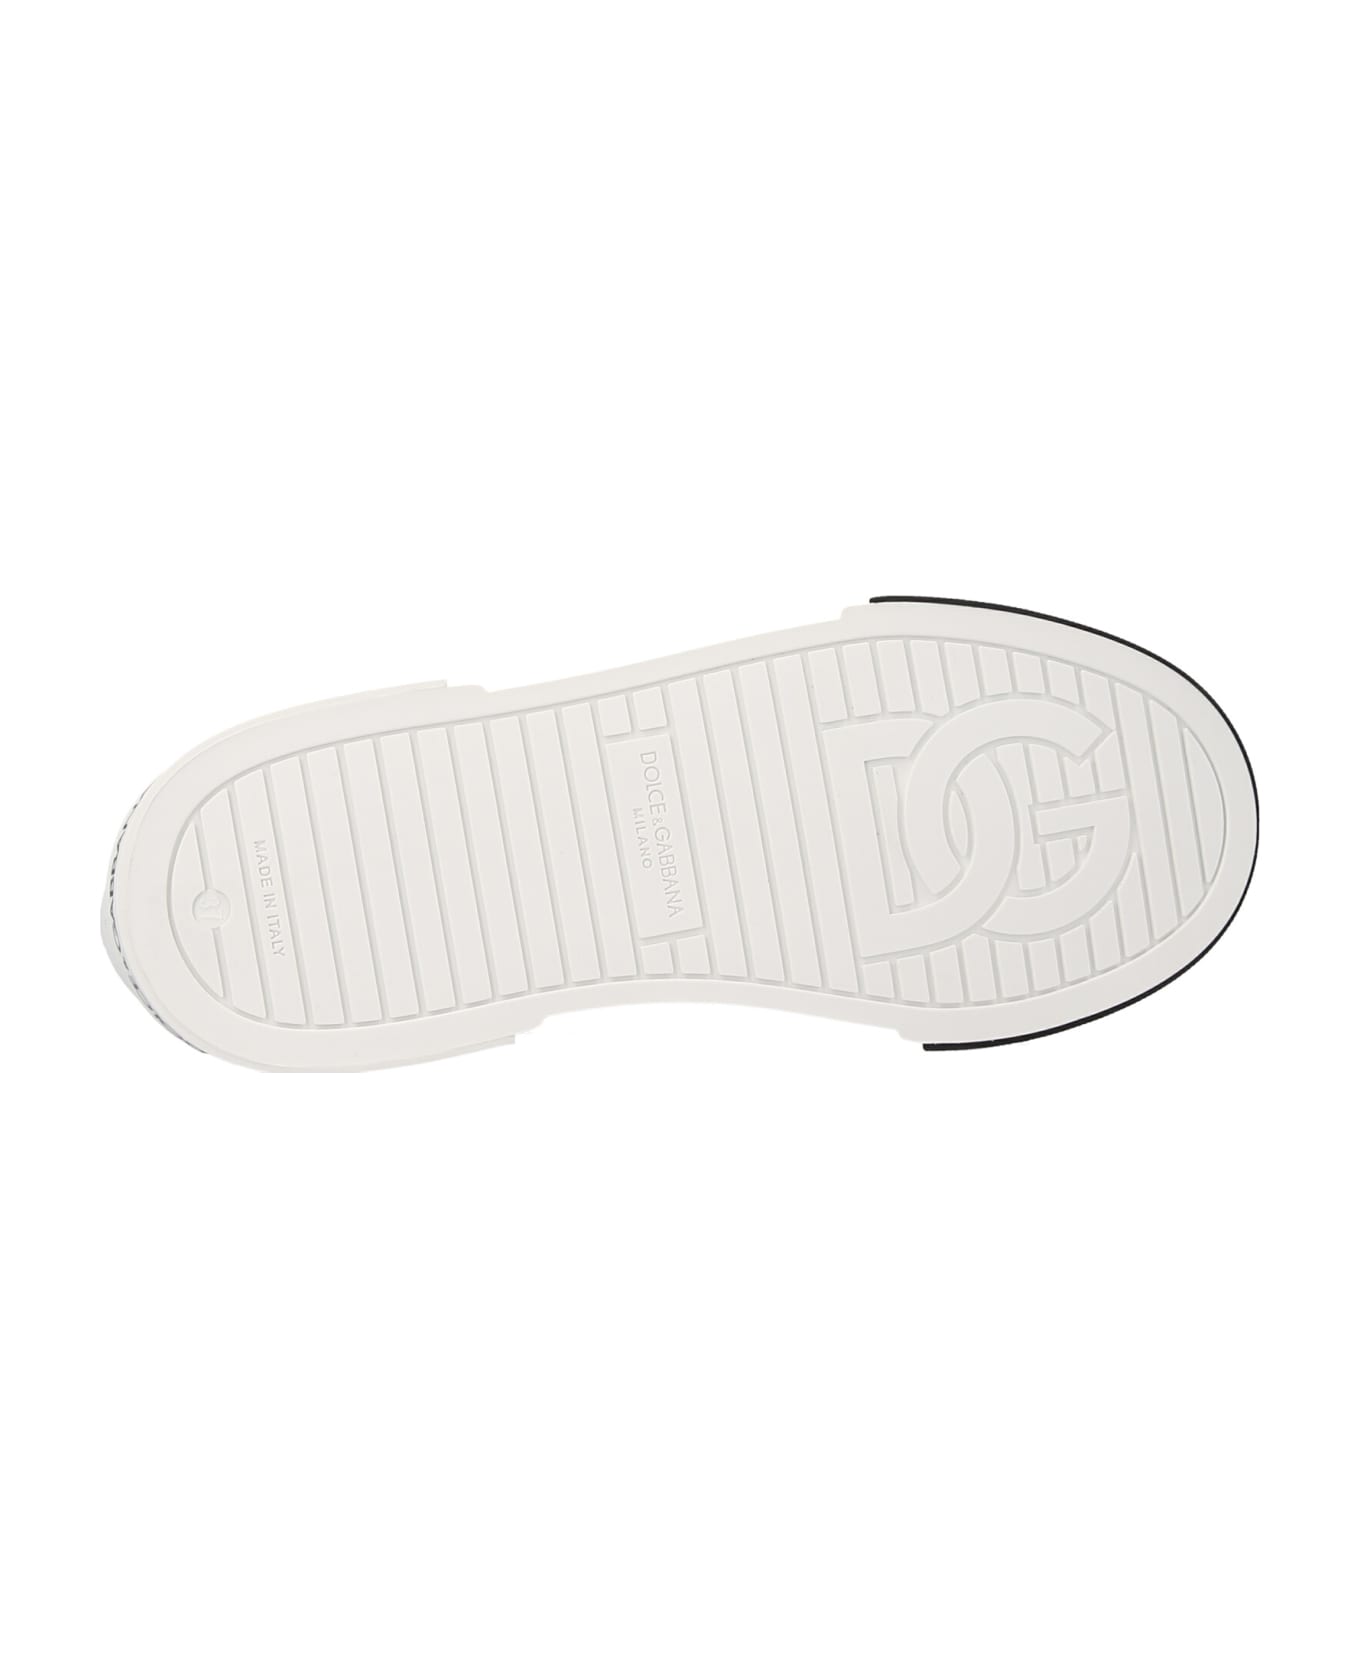 Dolce & Gabbana Logo Leather Sneakers - White/Black